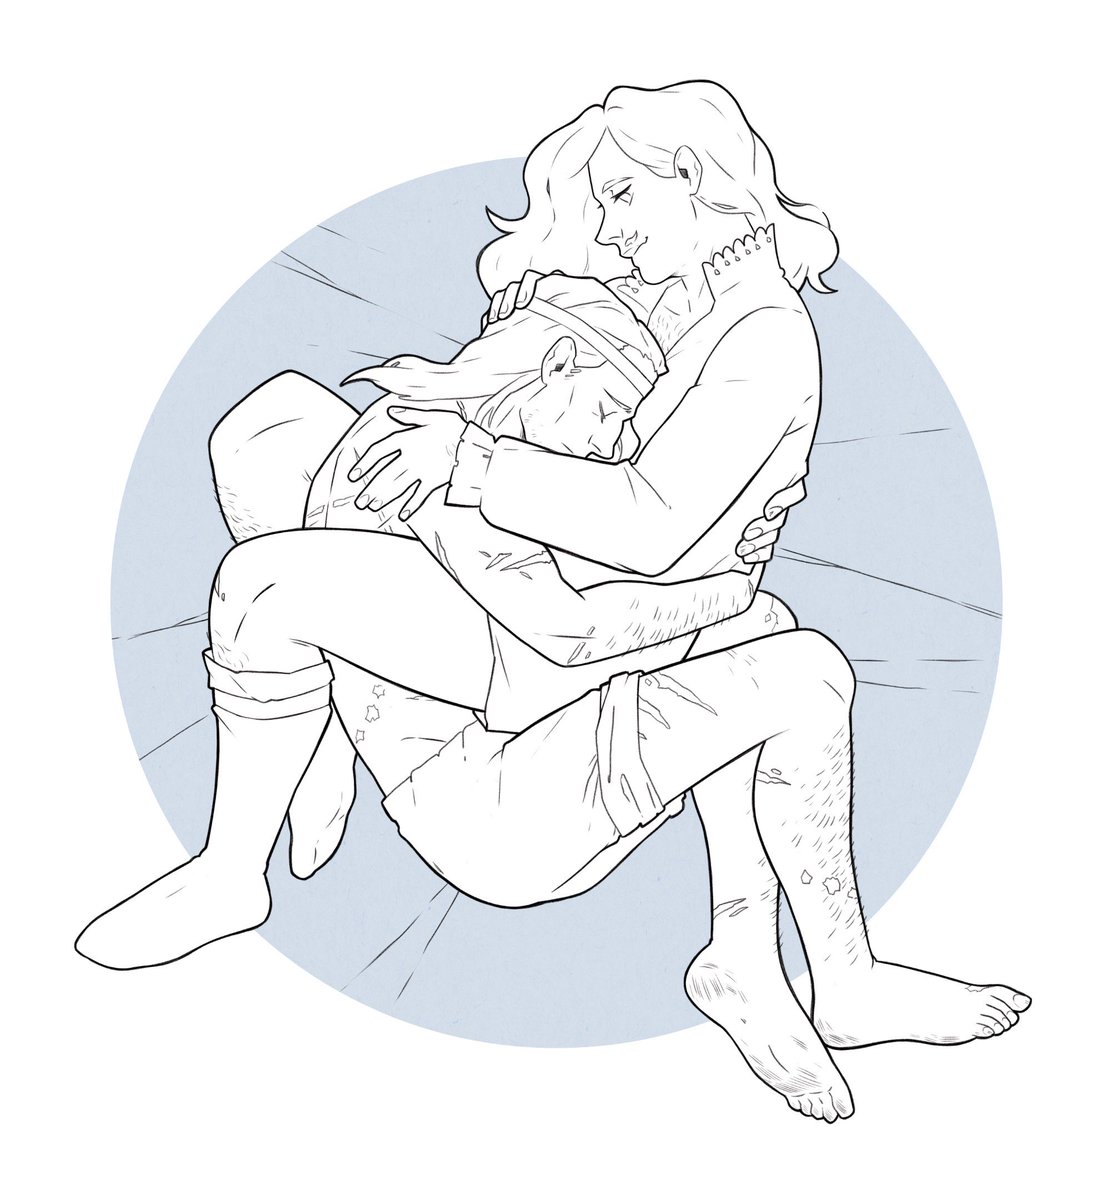 bookverse idiots Geralt and Dandelion cuddle like all good friends do UwU